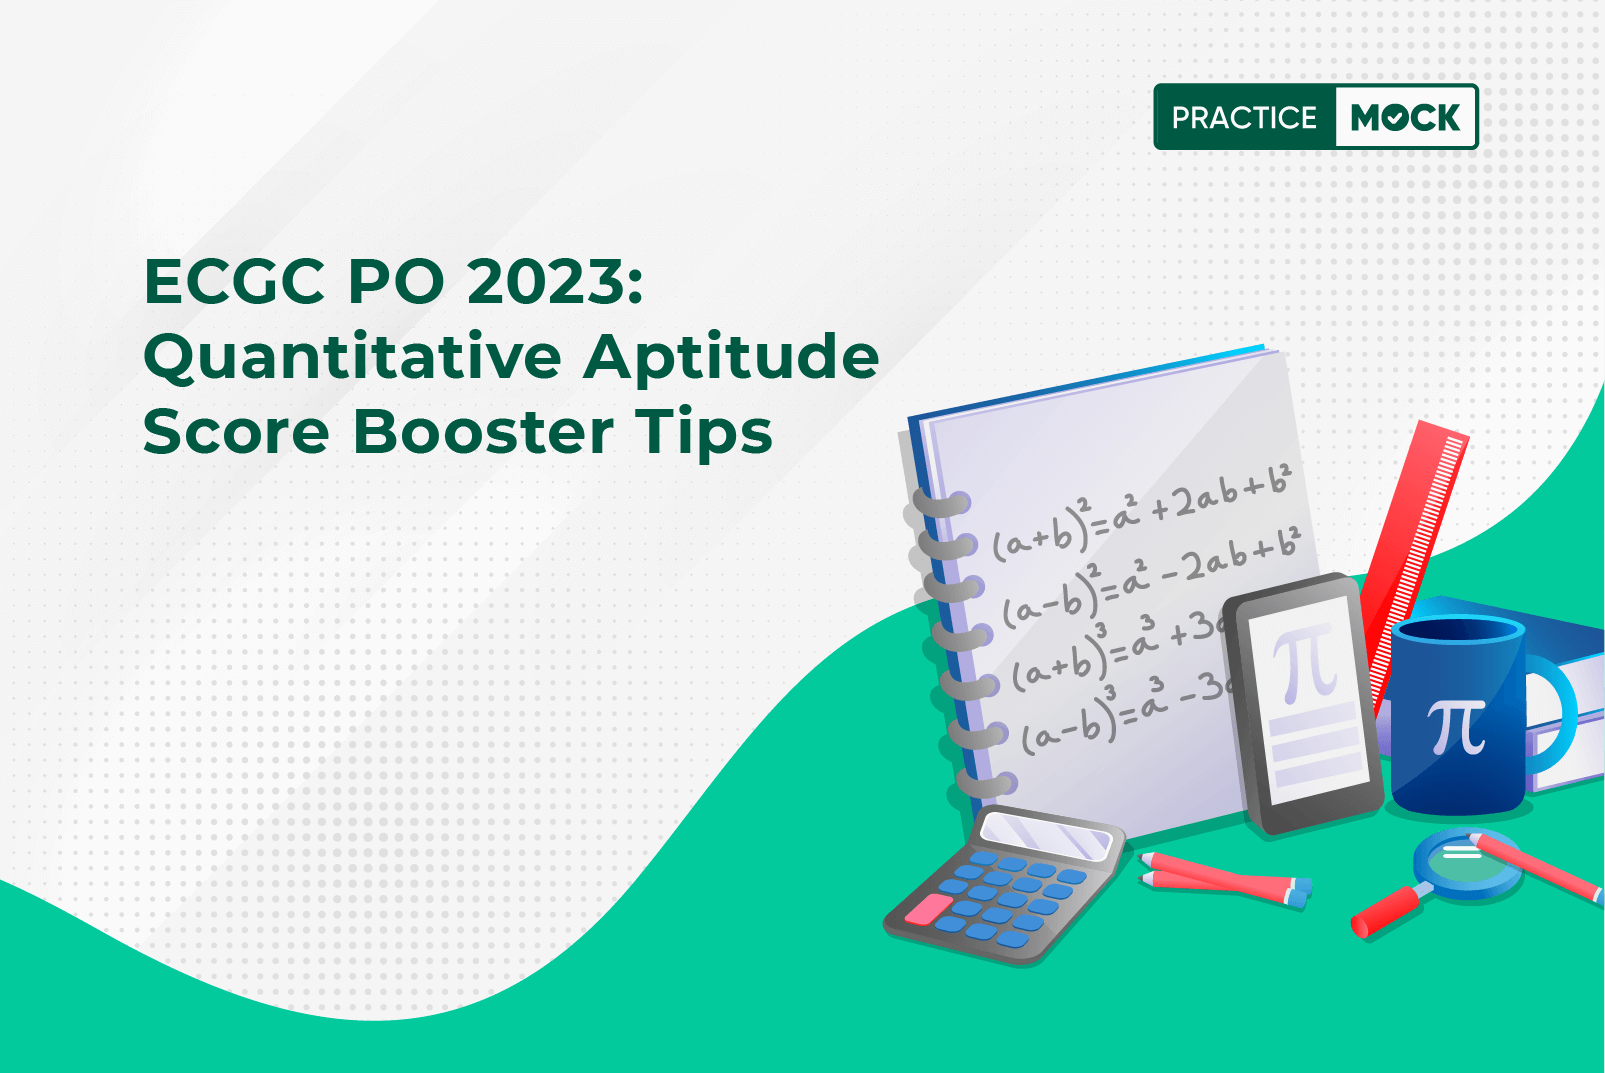 ECGC PO 2023 Quantitative Aptitude Score Booster Tips